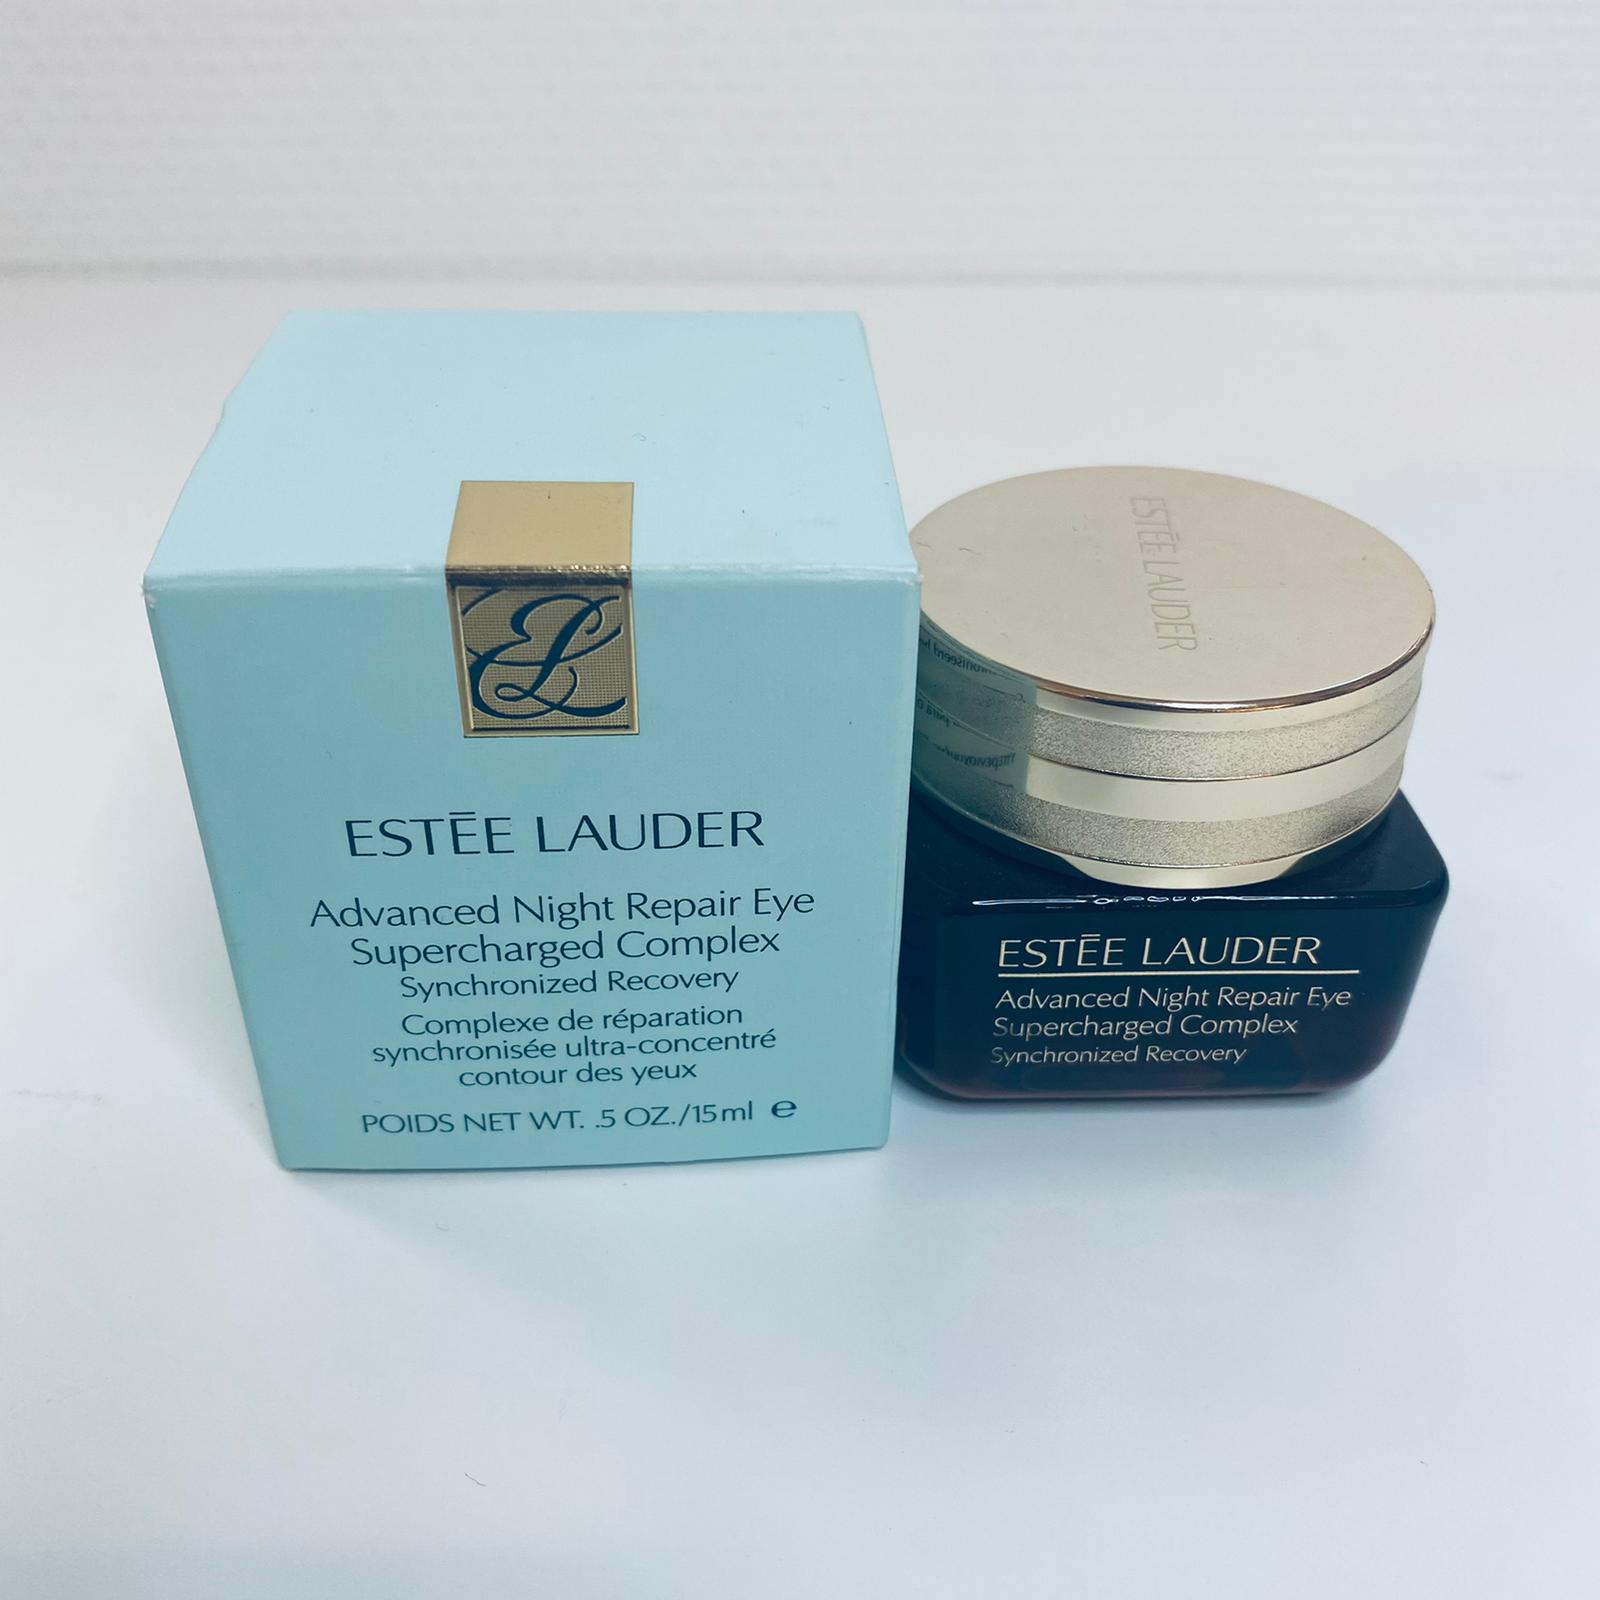 Estee Lauder advanced night repair eye 15 ml